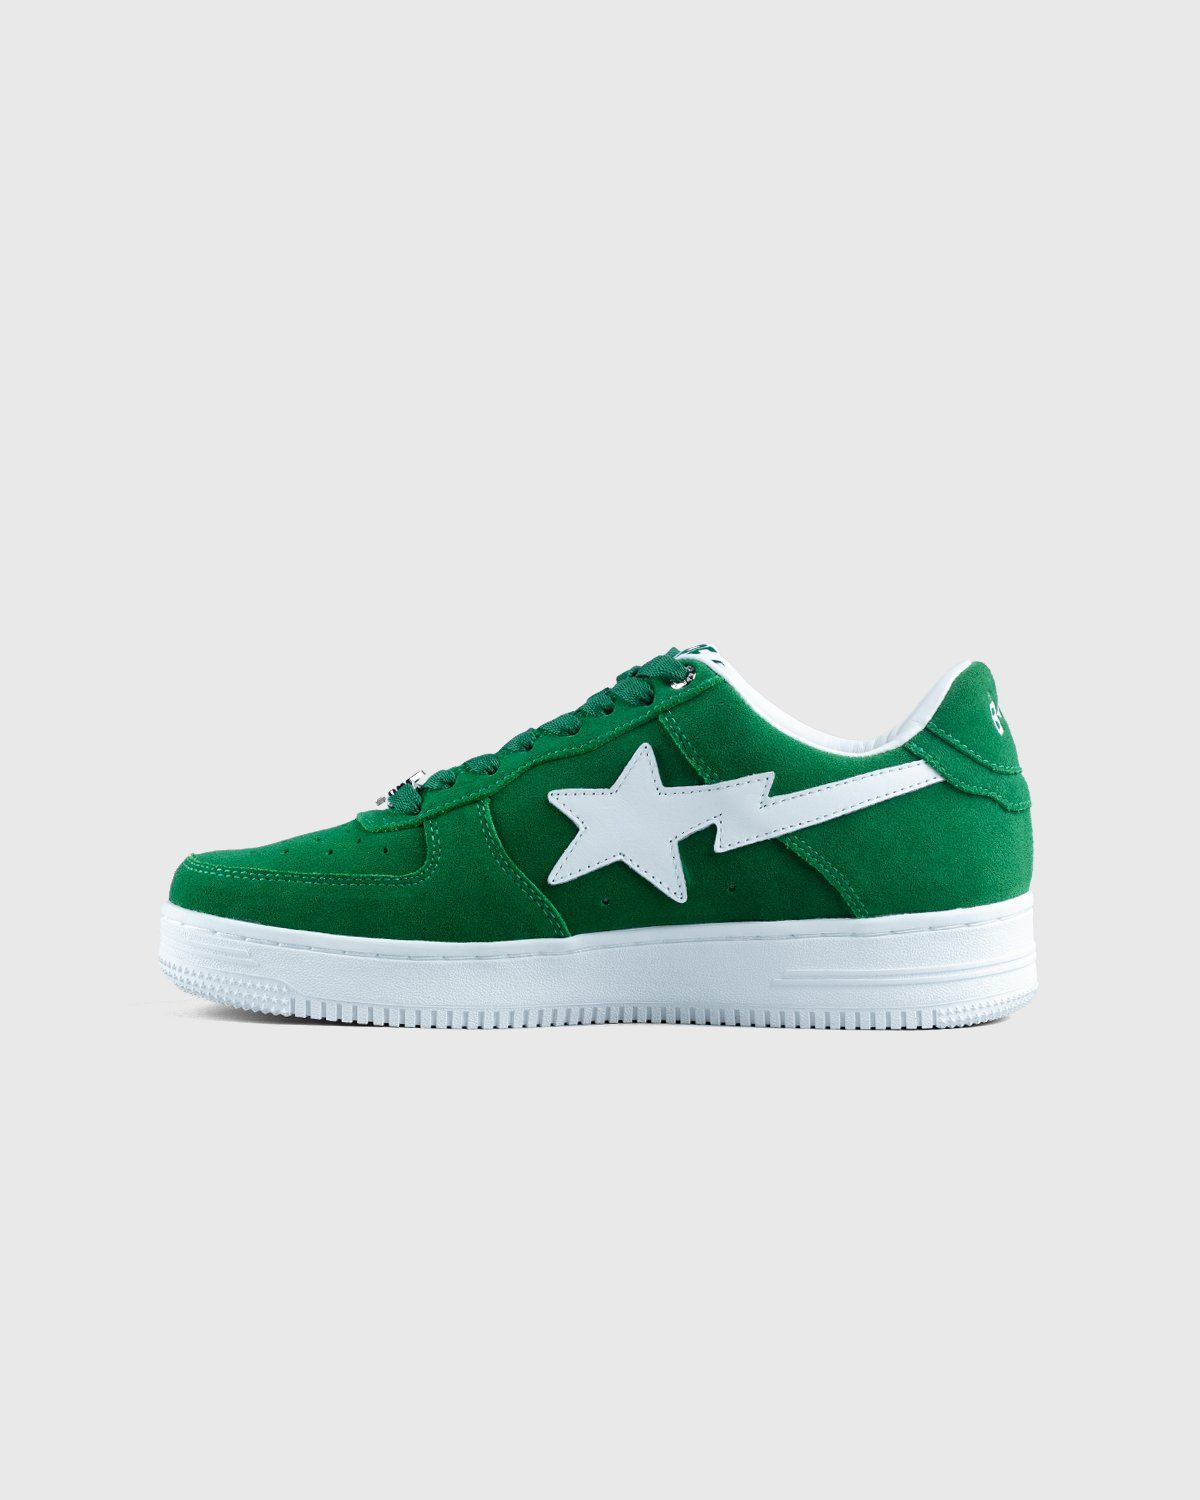 BAPE x Highsnobiety – BAPE STA Green - Low Top Sneakers - Green - Image 4